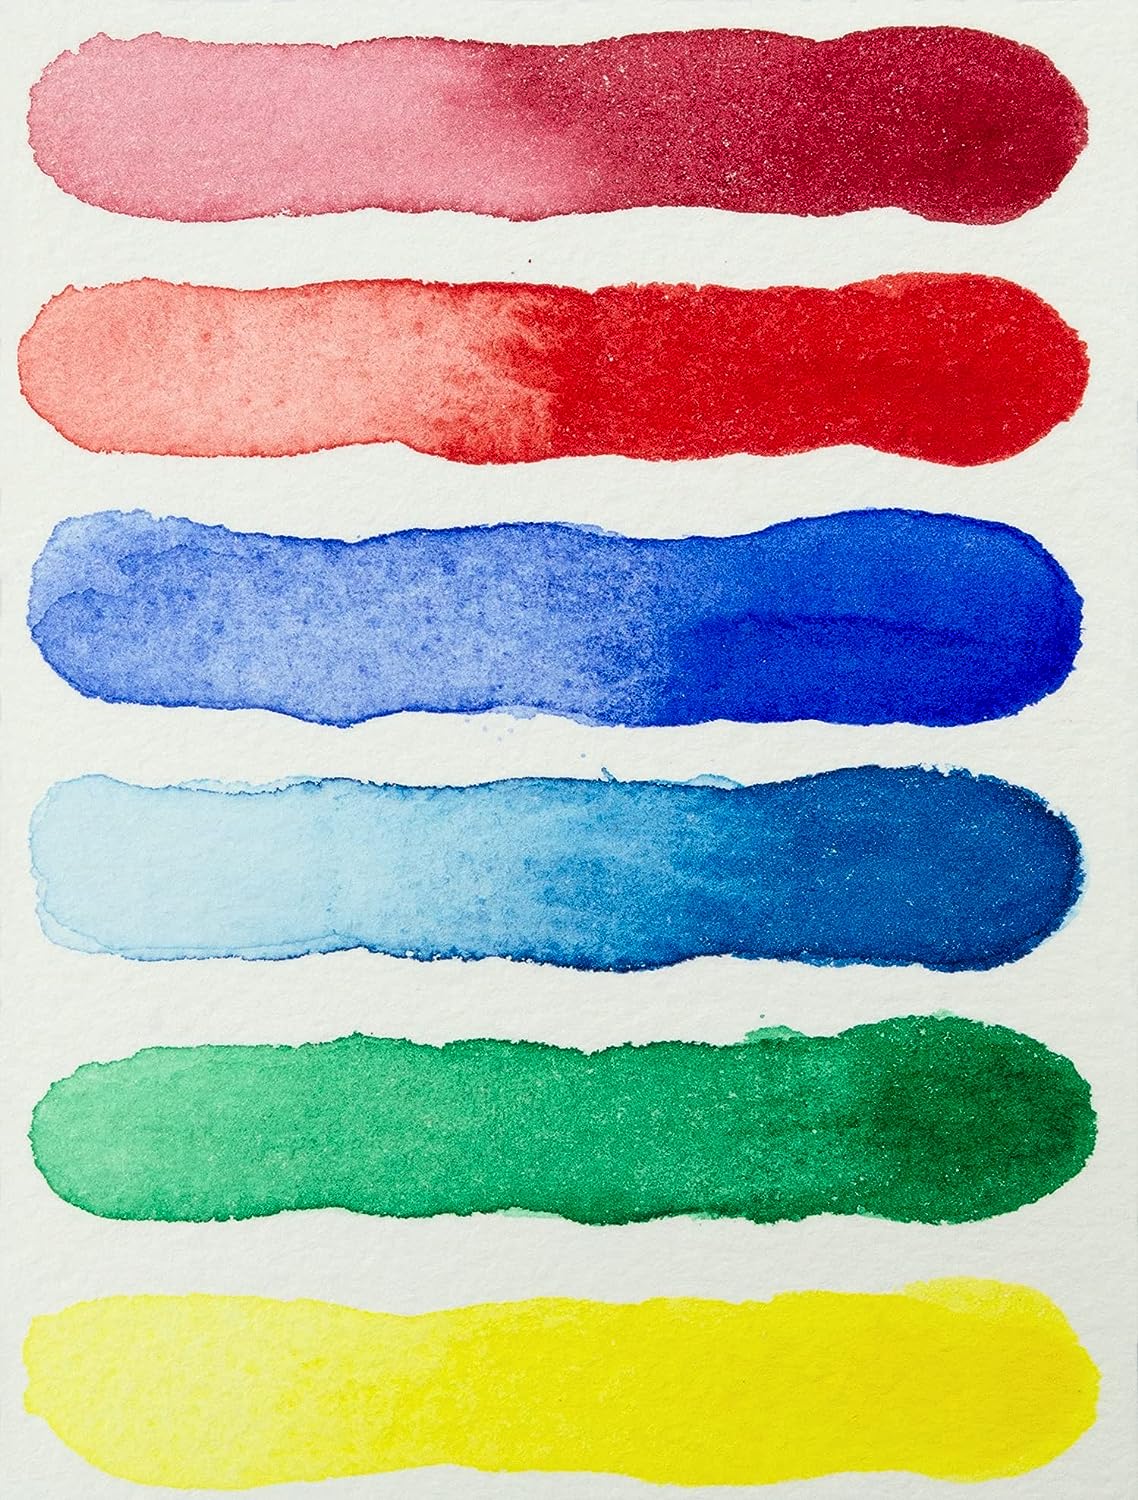 Daniel Smith Milind Mulick Master Artist Watercolor Set of 6 Shades